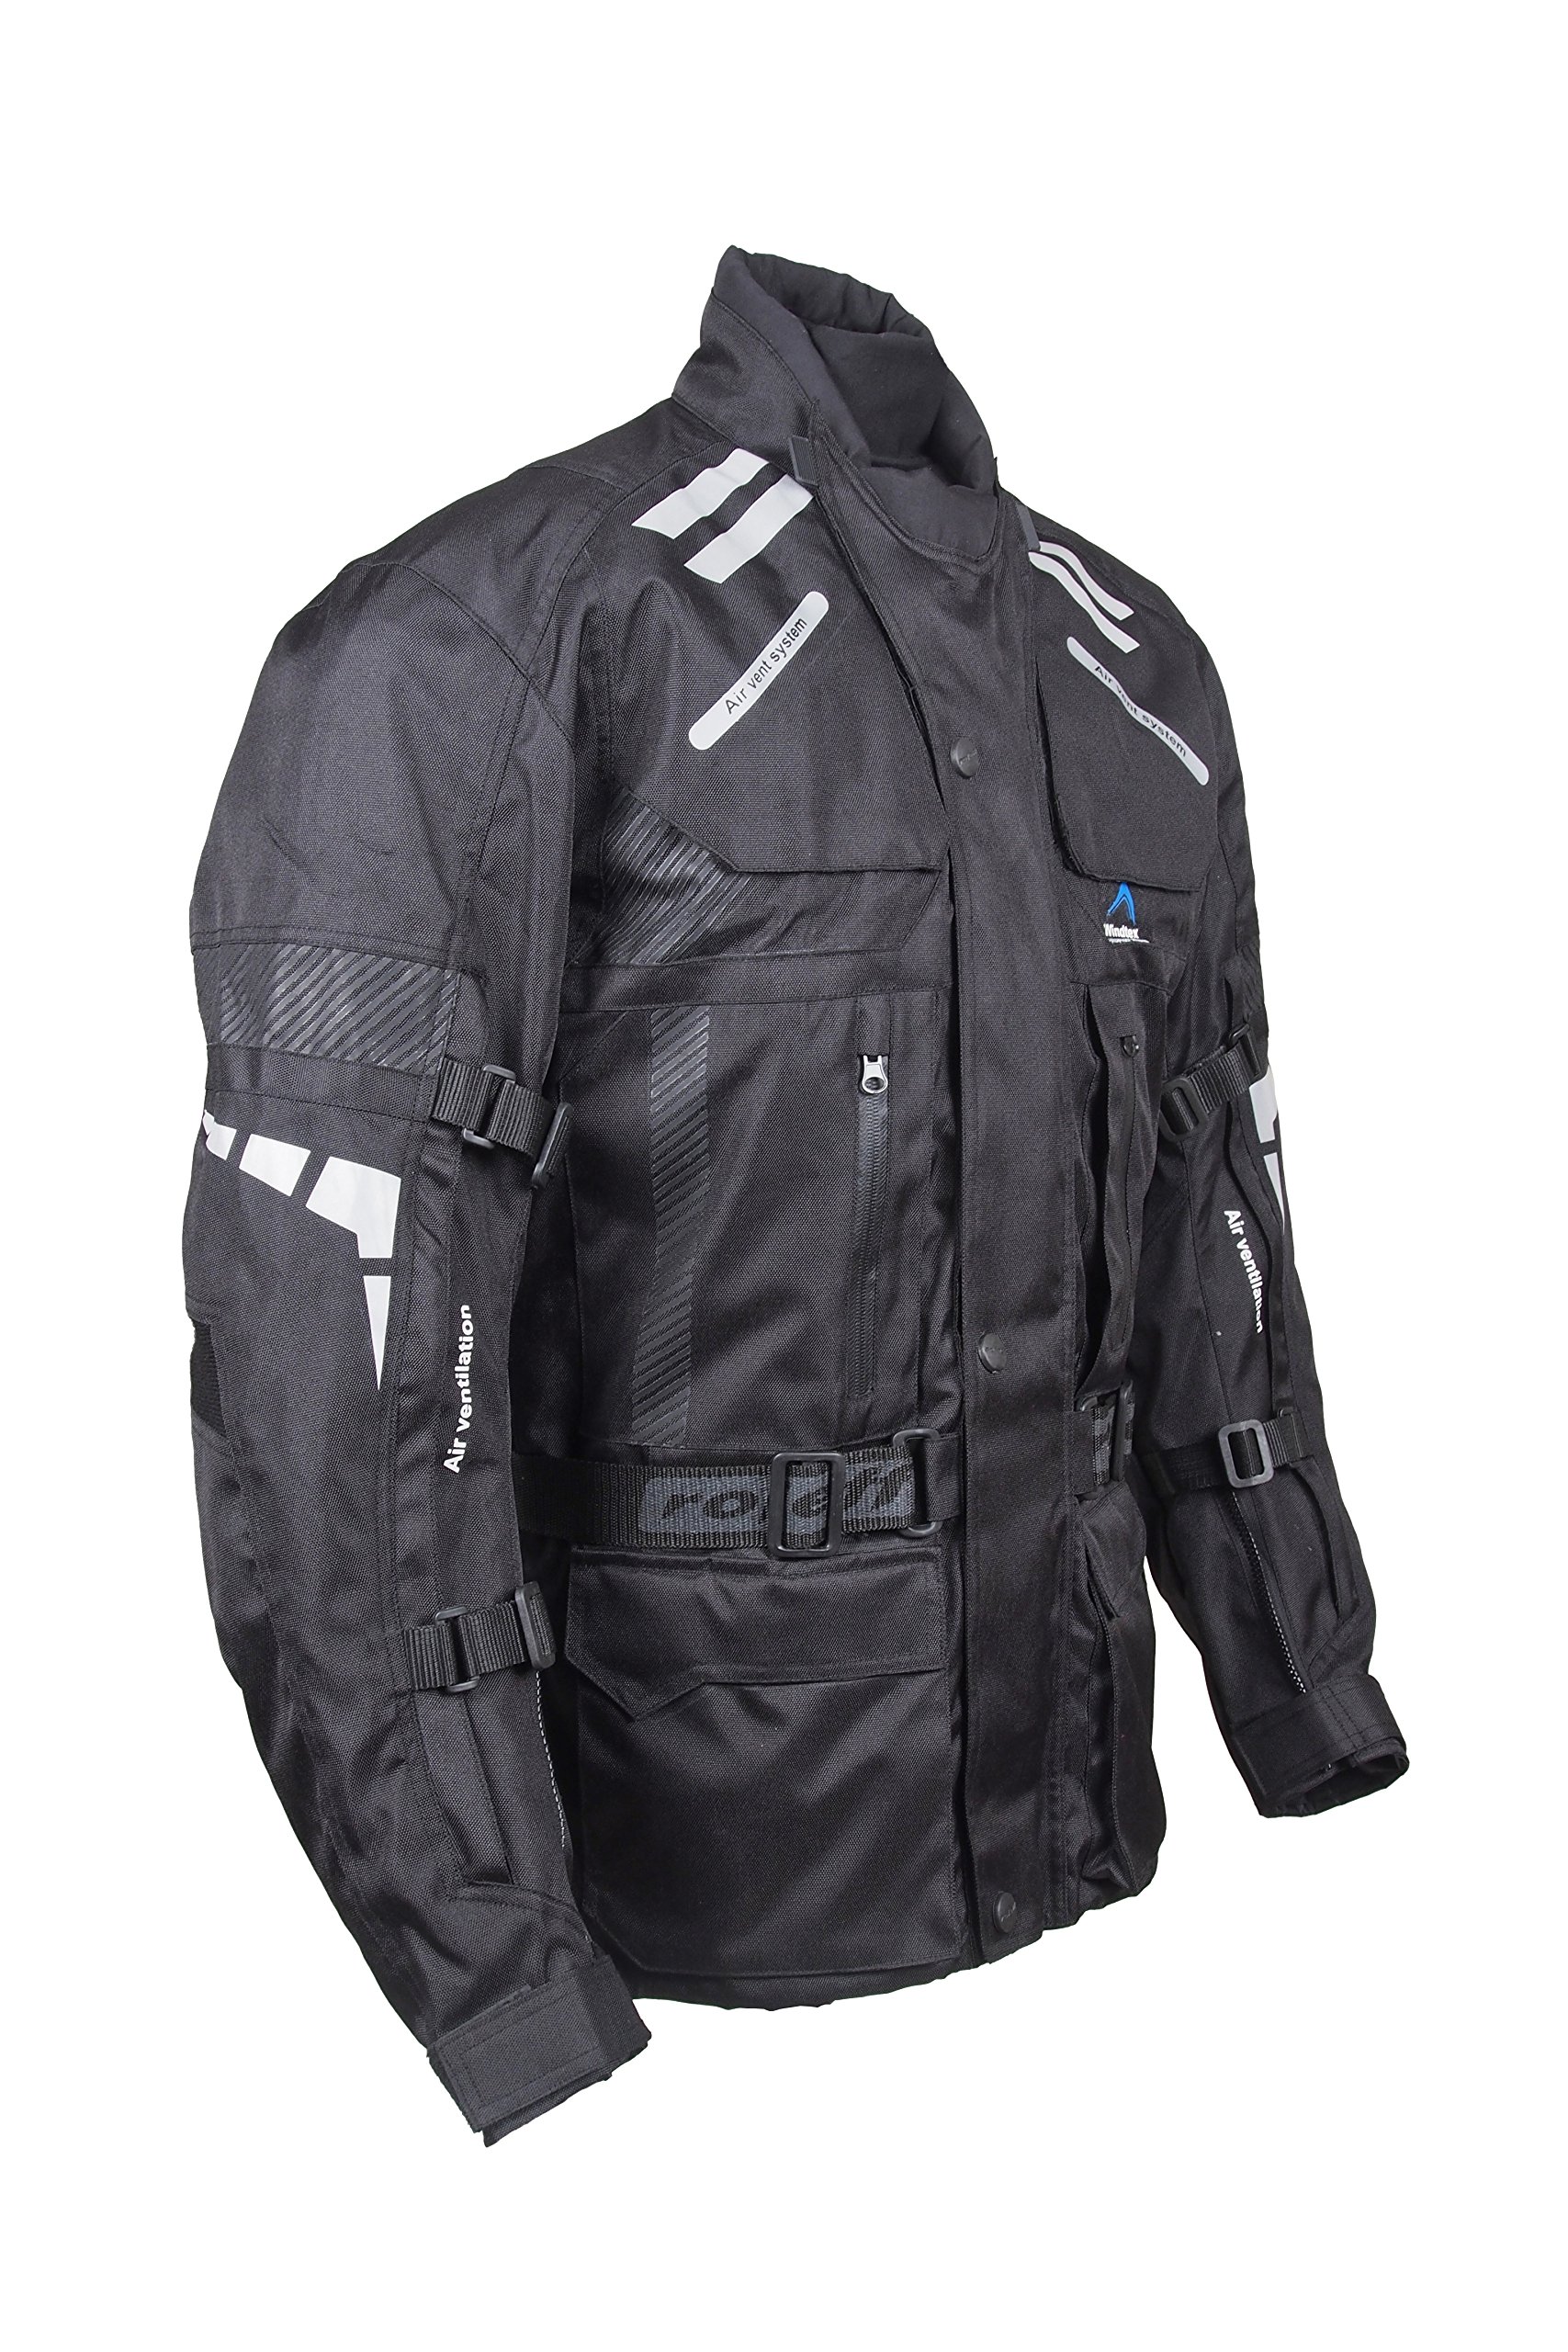 Roleff Racewear Unisex 7742 Textiljacke Motorradjacke mit Protektoren, Schwarz, S EU